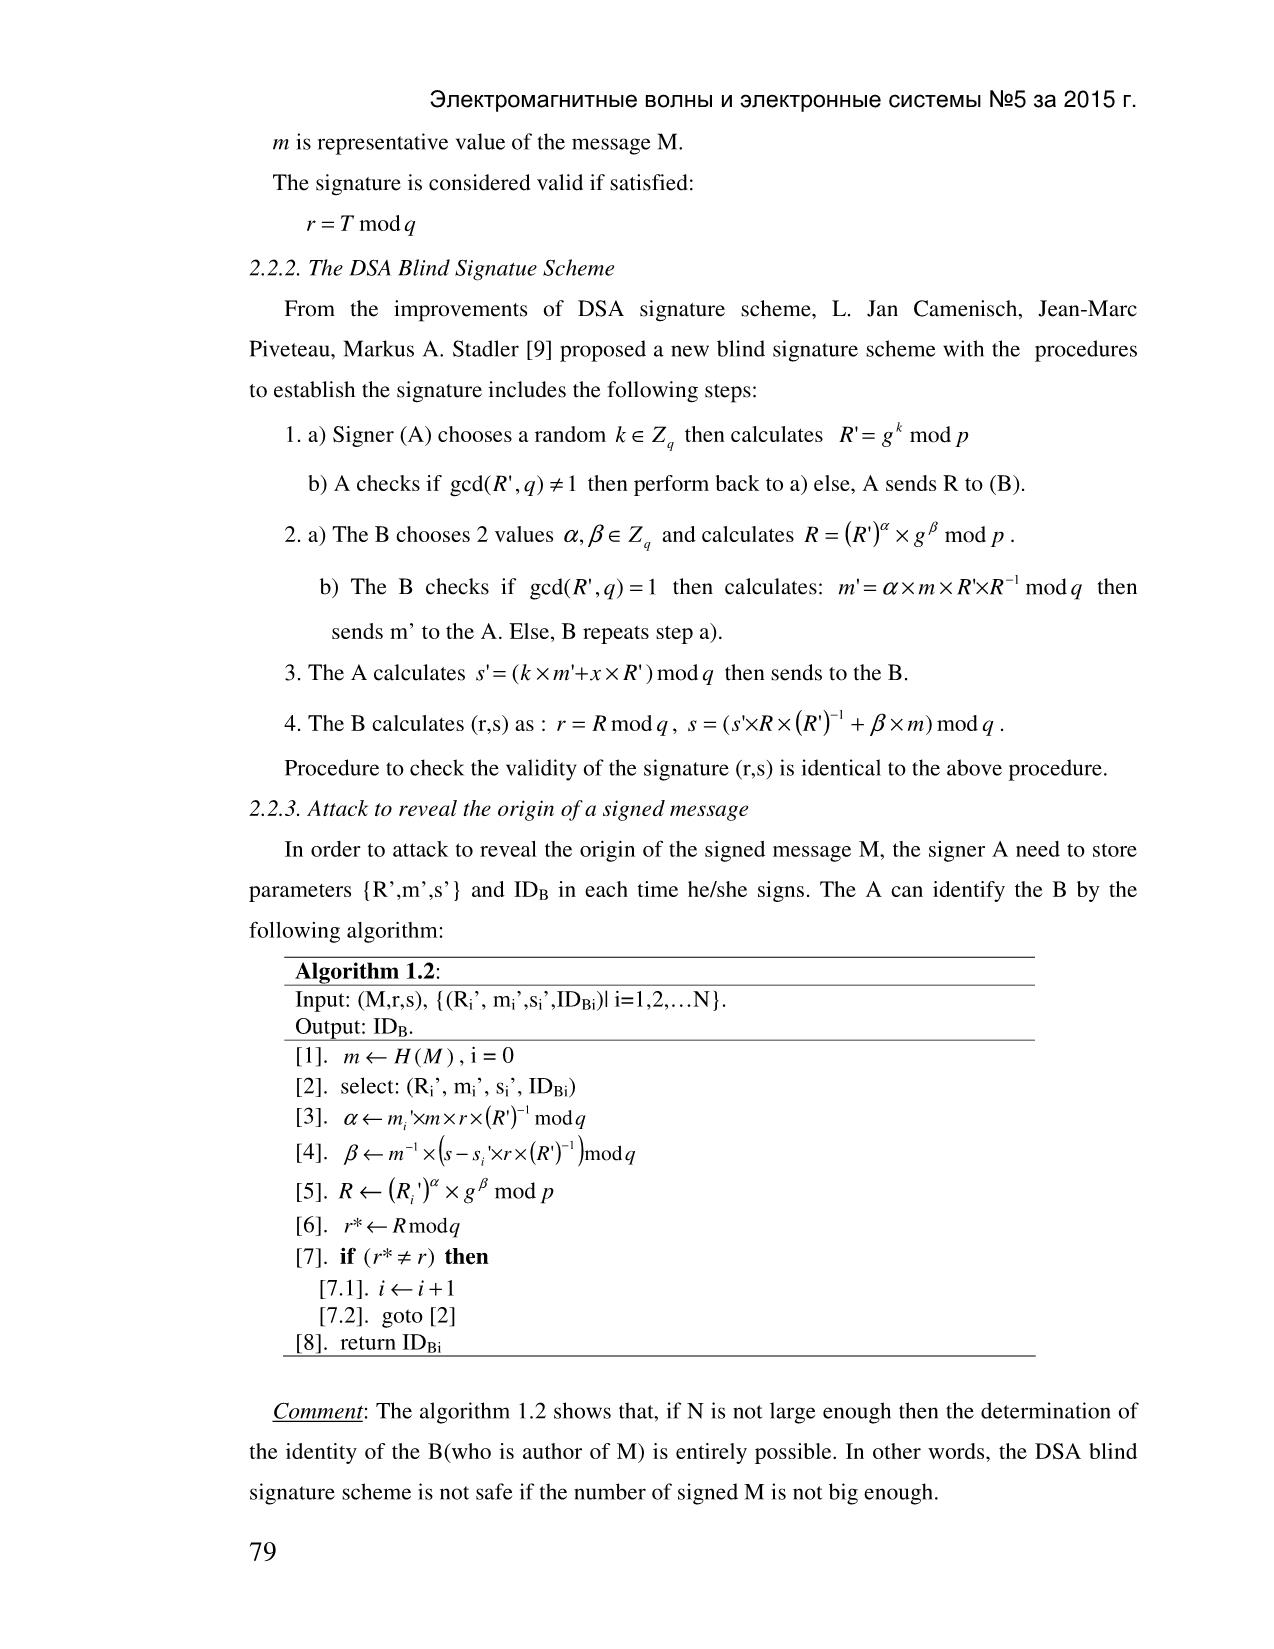 Blind signature scheme based on discrete logarithm problem trang 4